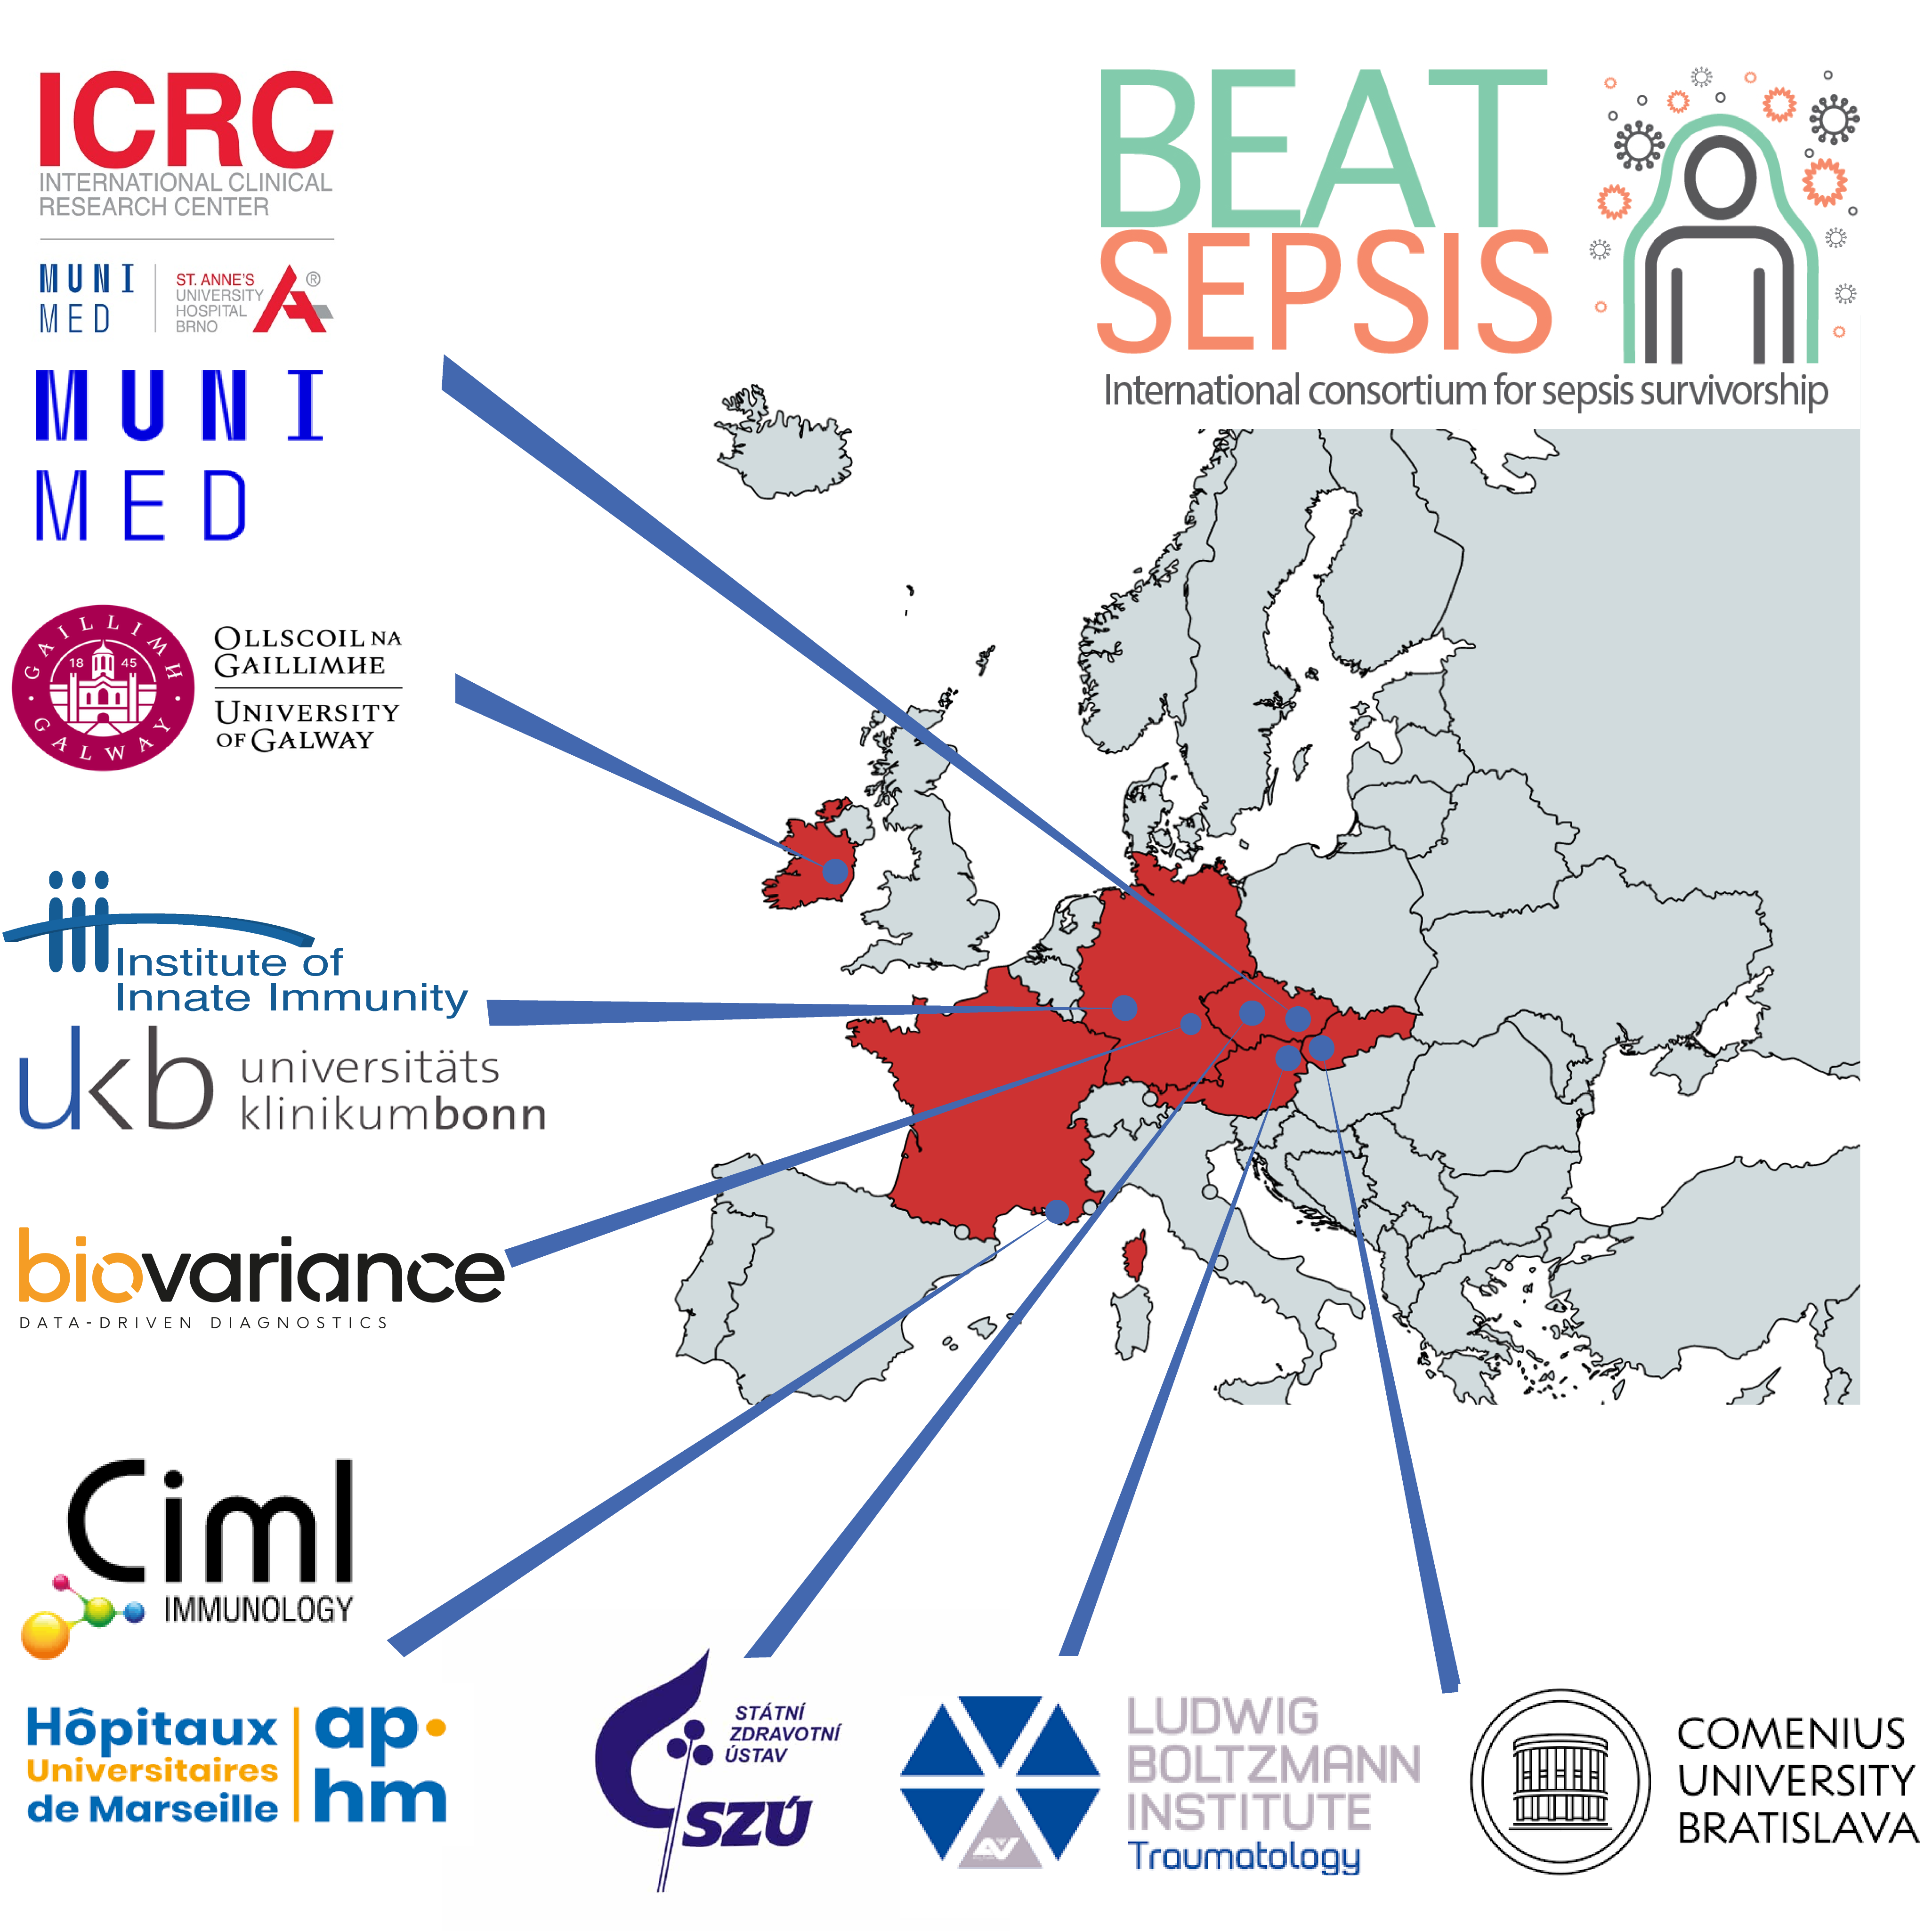 BEATSEPSIS - International consorcium for sepsis survivorship